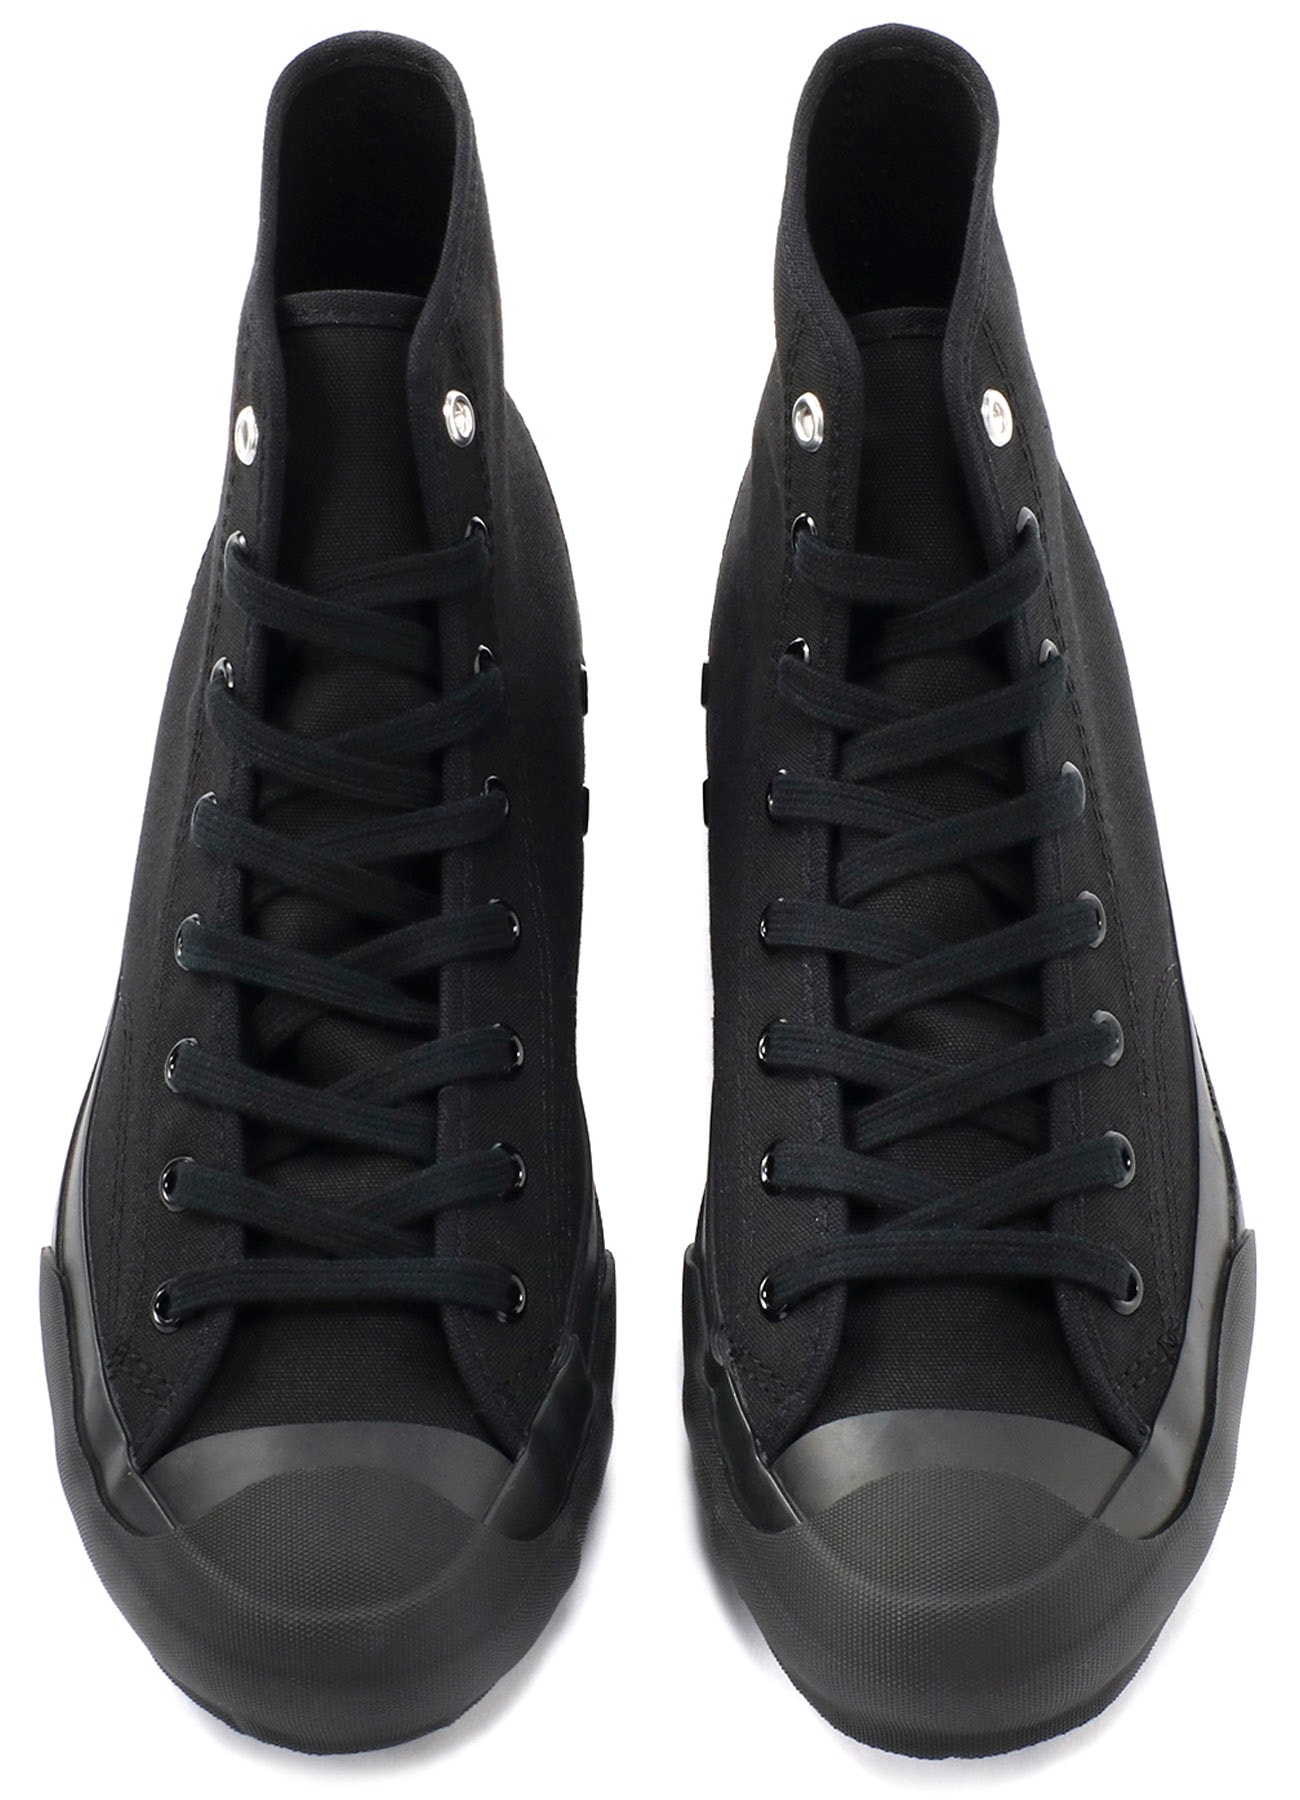 No.8 Canvas High-Cut Sneakers (US 4.5 Black x Black): Vintage 1.1 